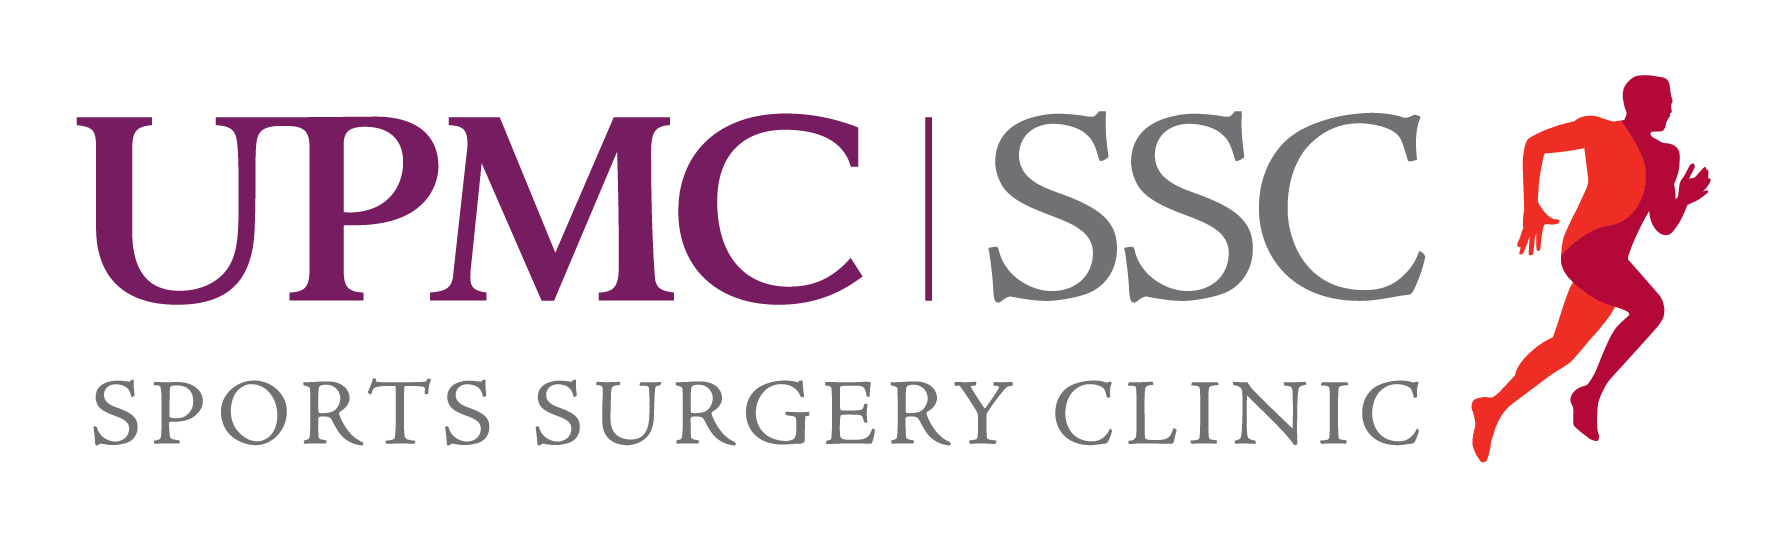 UPMC SSC Sports Surgery Clinic